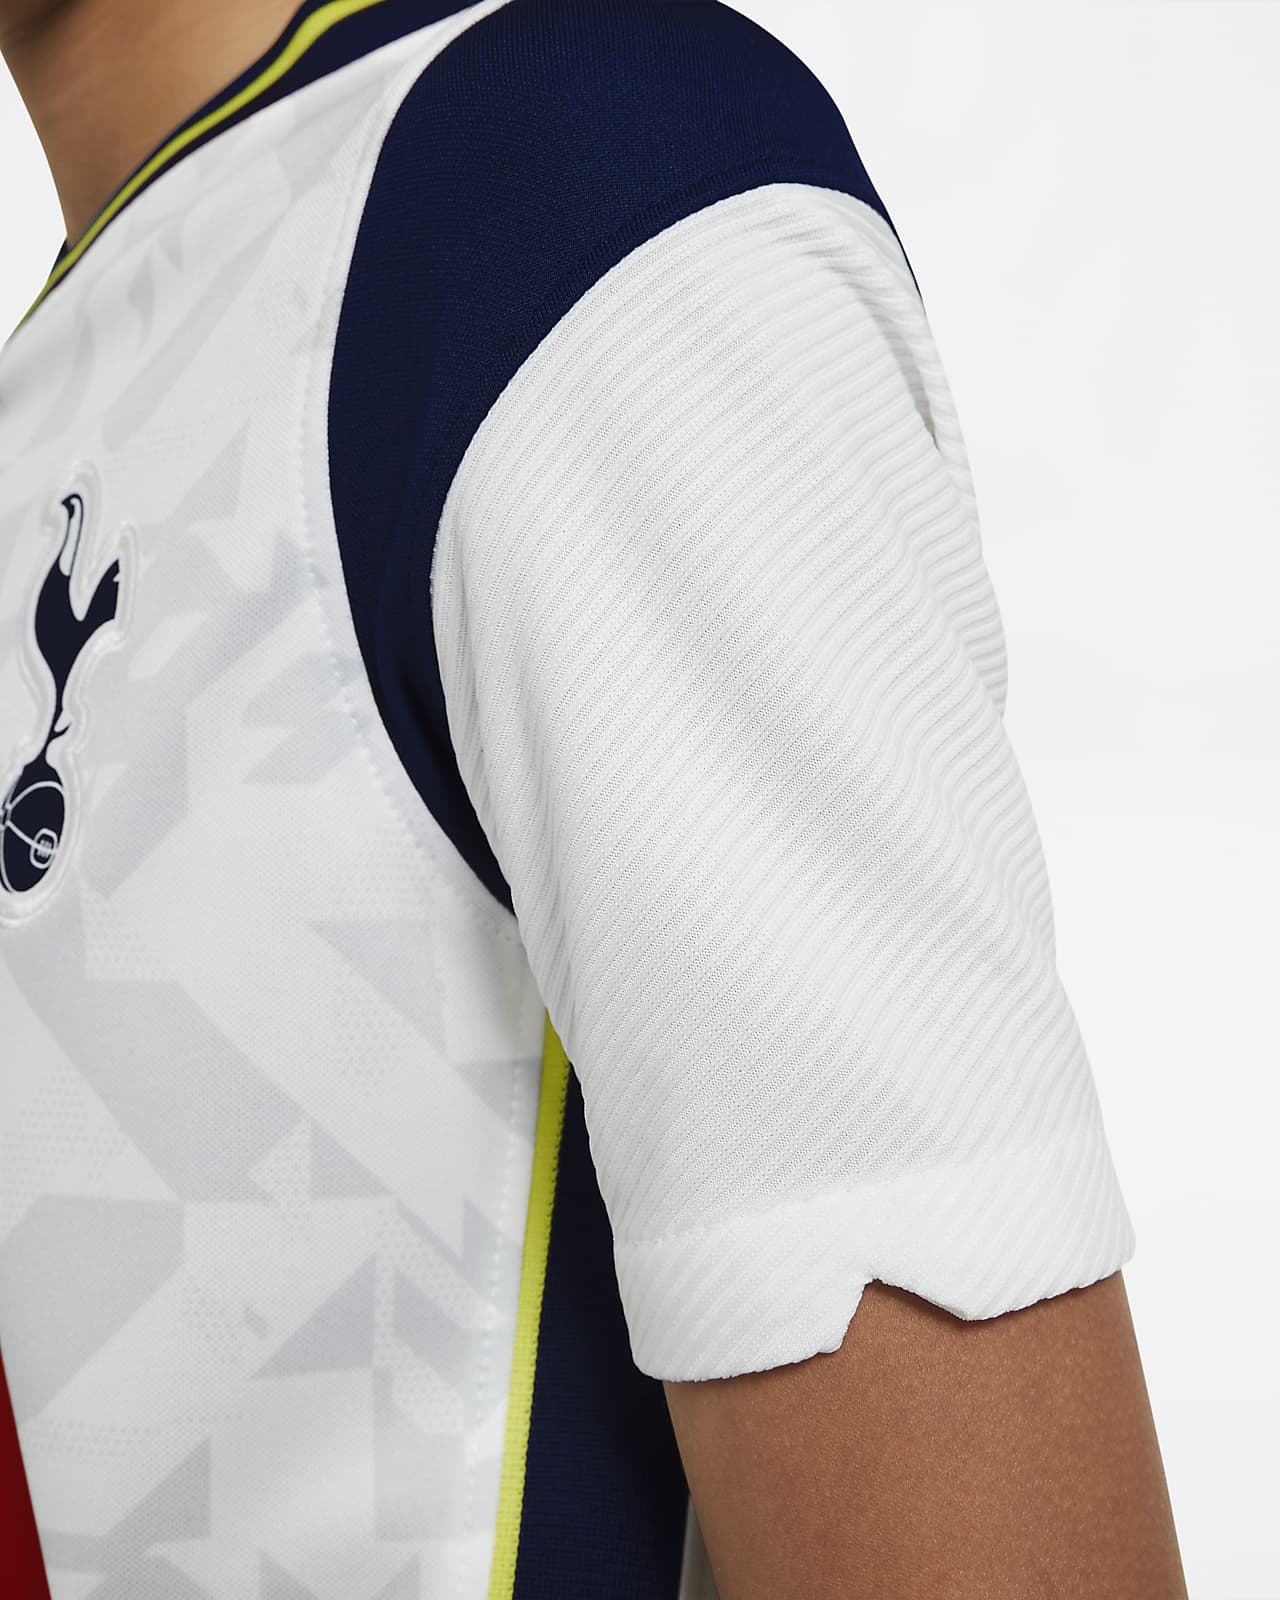 Primera equipación Stadium Tottenham Hotspur 2020/21 Camiseta de fútbol - Niño/a. Nike ES